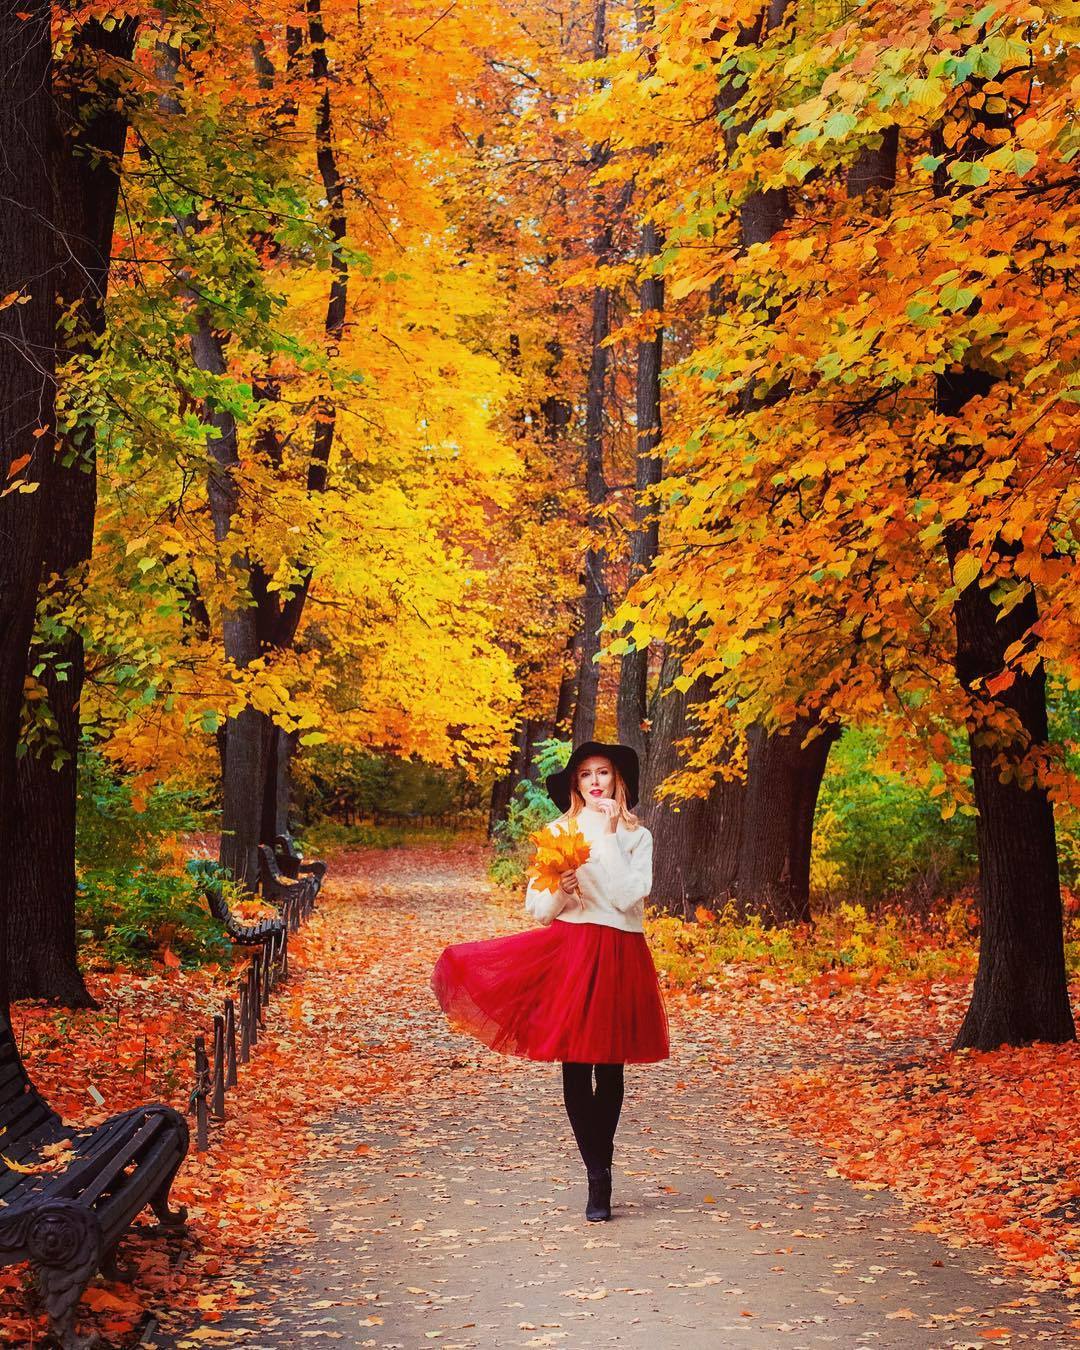 В парк пришла осень. Осенняя фотосессия. Осень. Осенний парк. Осенний листопад.